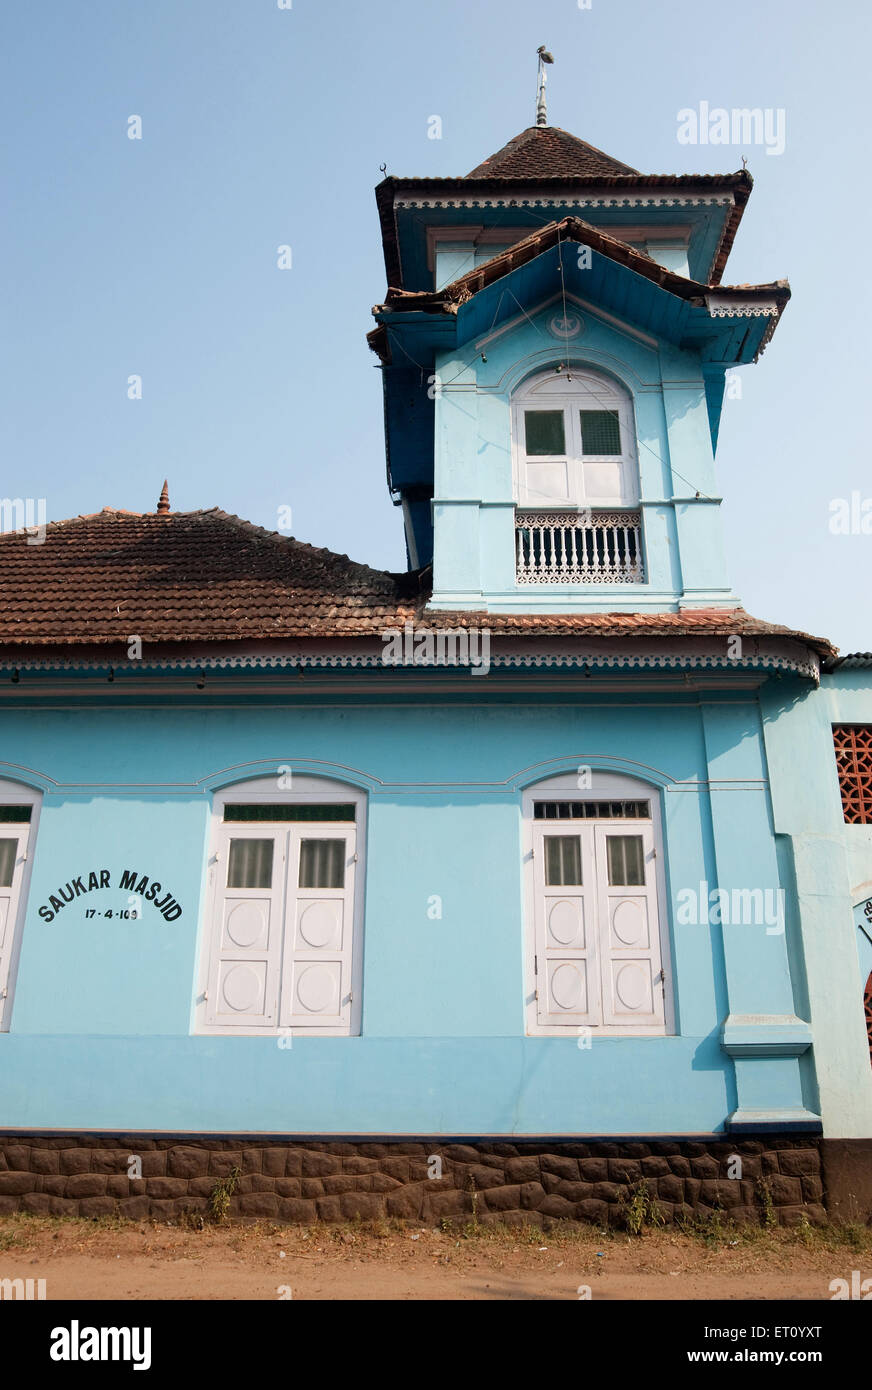 Saukar Masjid ; Alleppey ; Alappuzha ; Kerala ; India ; Asia Foto de stock